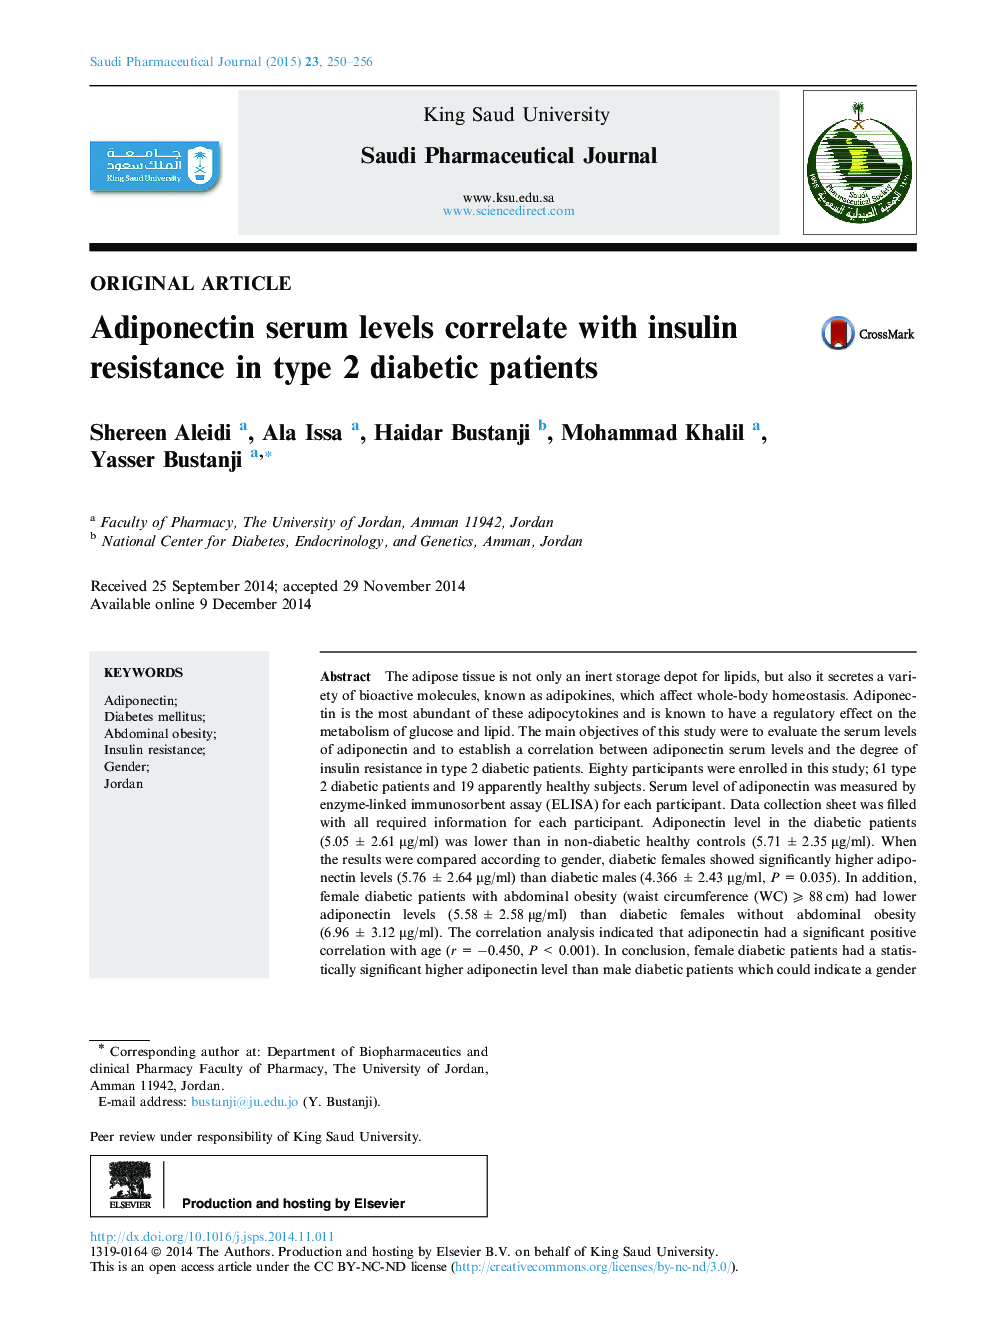 Adiponectin serum levels correlate with insulin resistance in type 2 diabetic patients 